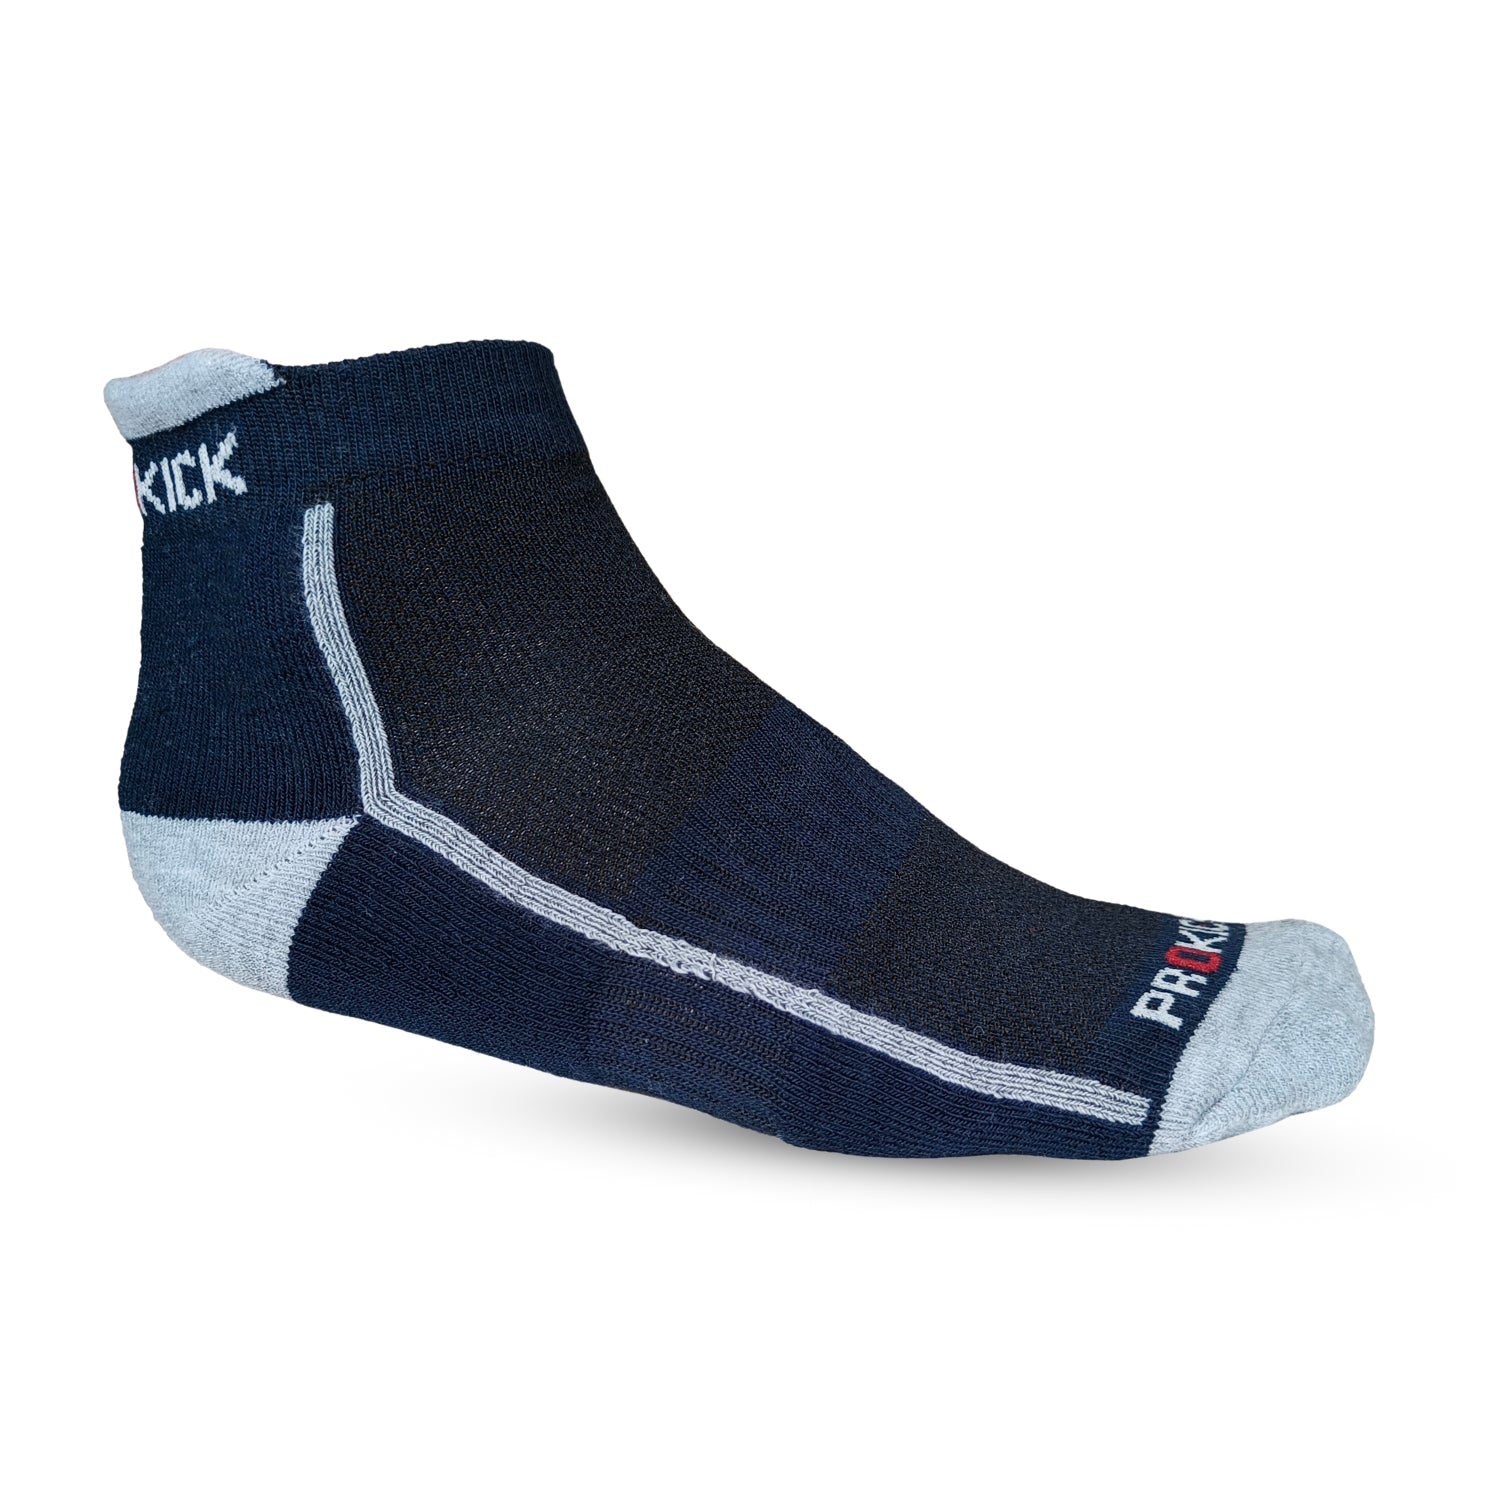 Prokick Low Ankle Socks for Men & Women, Assorted - Pack of 3 - Best Price online Prokicksports.com